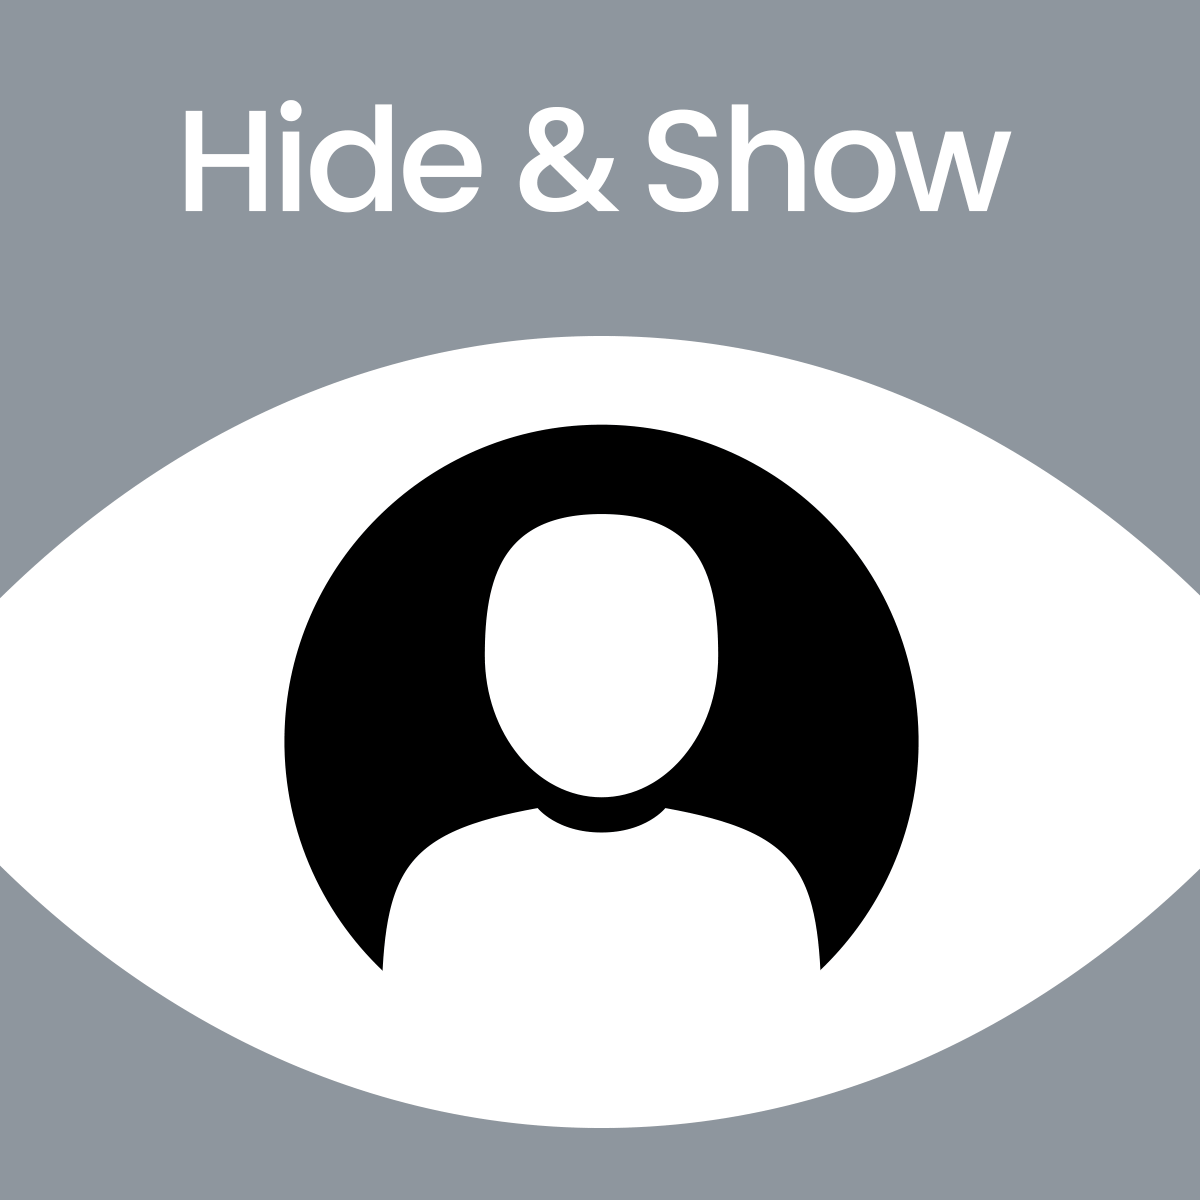 Divi-Modules – Hide & Show thumbail image